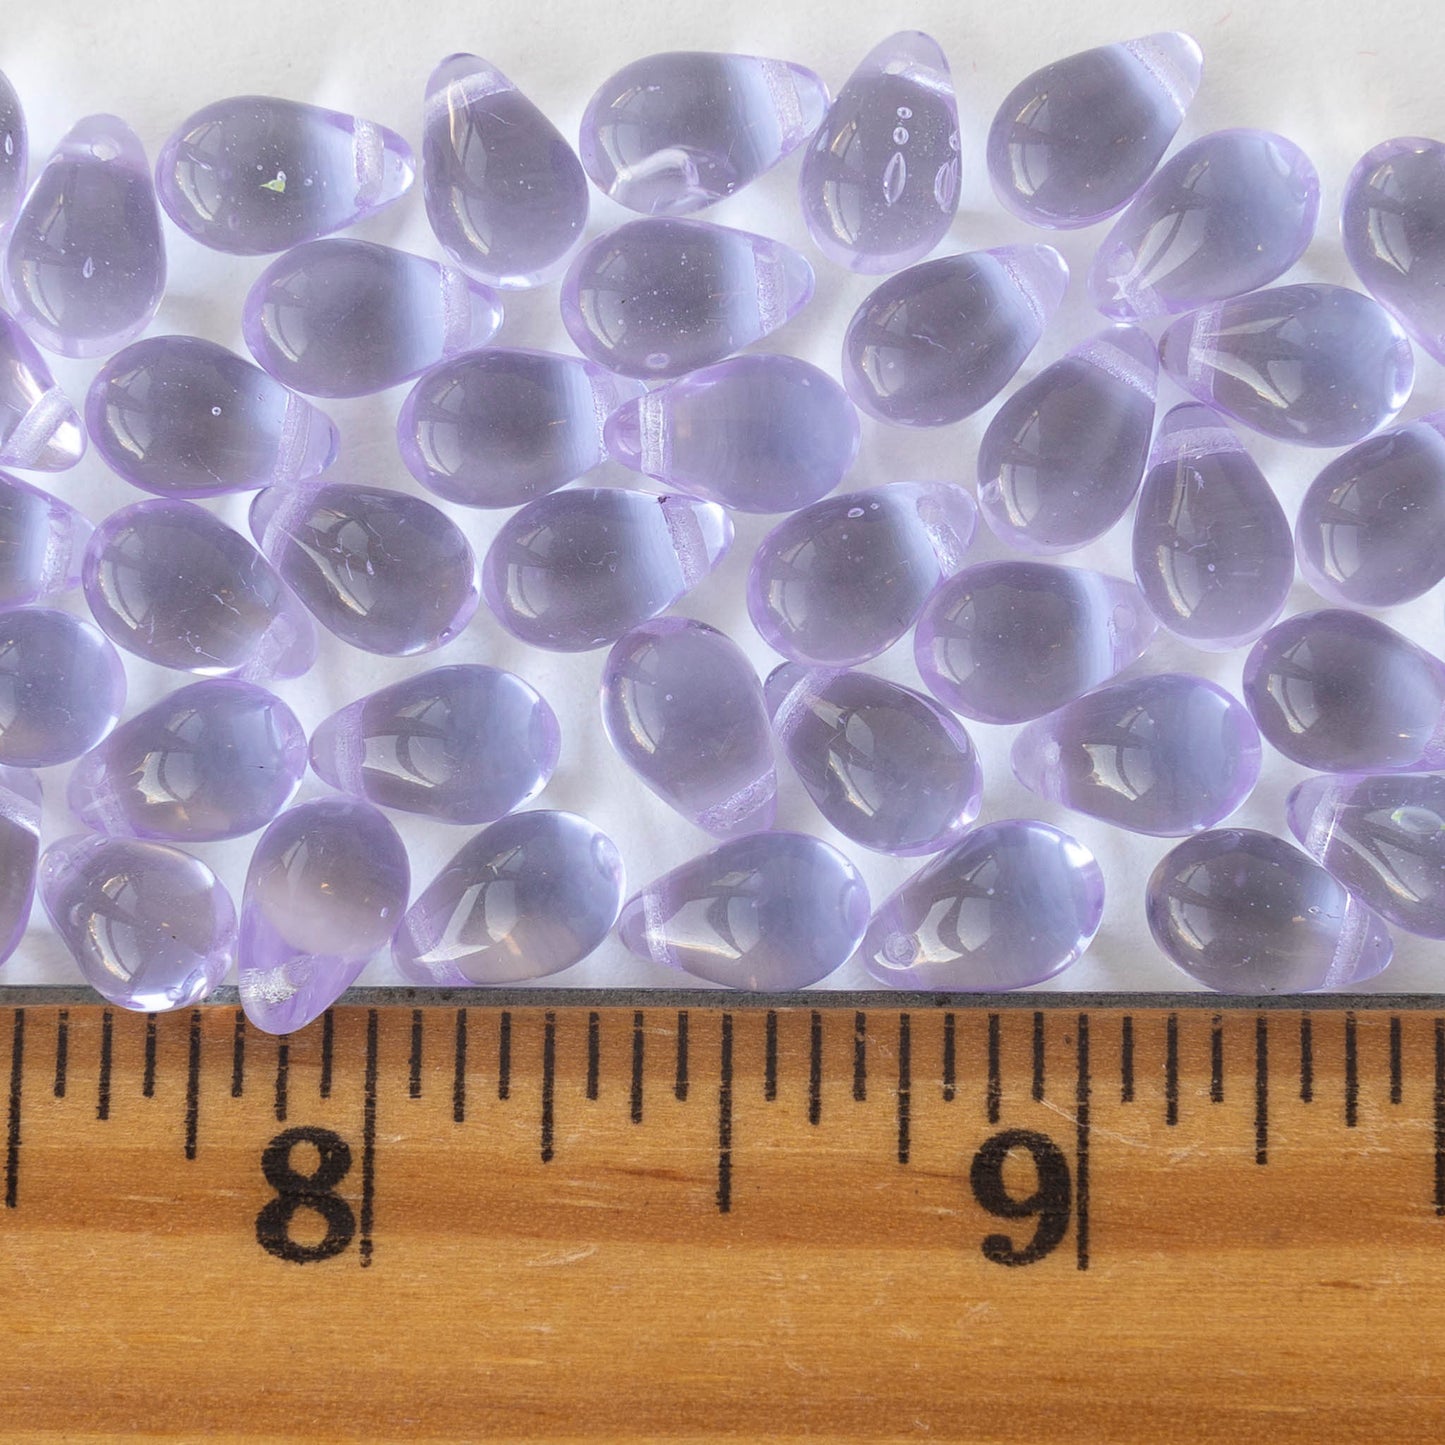 6x9mm Glass Teardrop Beads - Light Transparent Lavender - 50 Beads